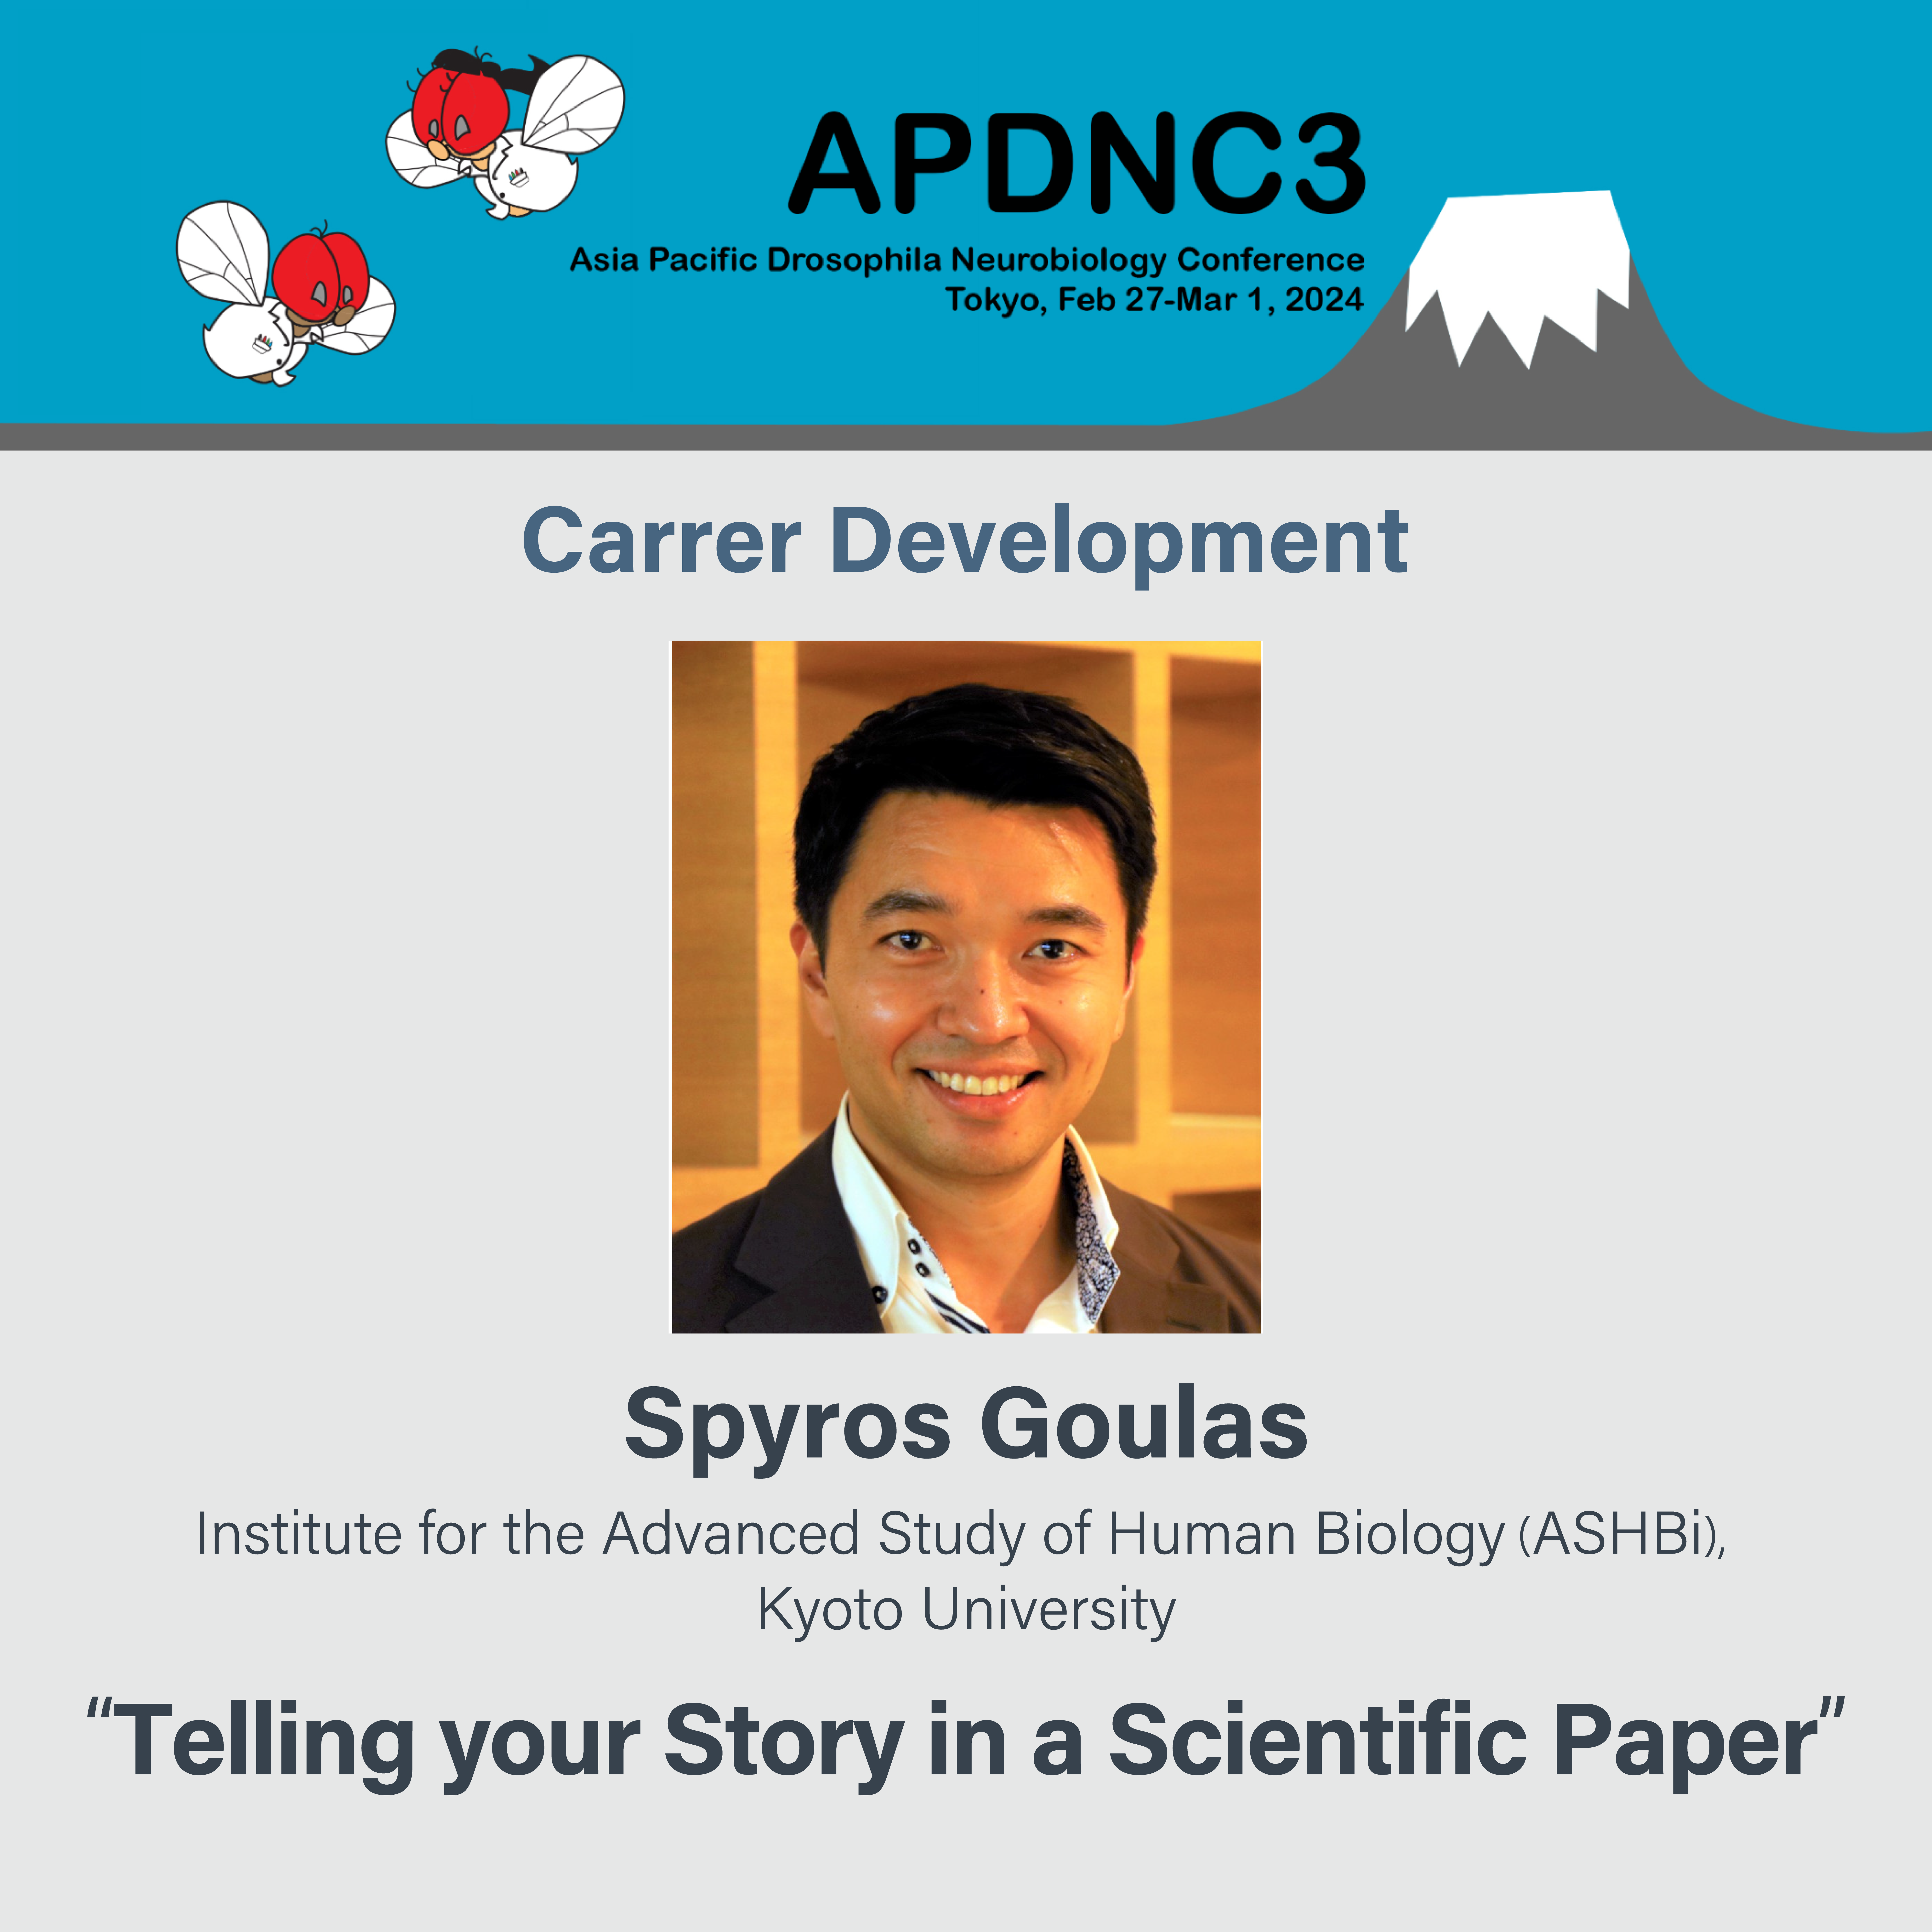 Spyros Goulas講師がthe 3rd Asia Pacific Drosophila Neurobiology Conference (APDNC3)にて招待講演を行いました